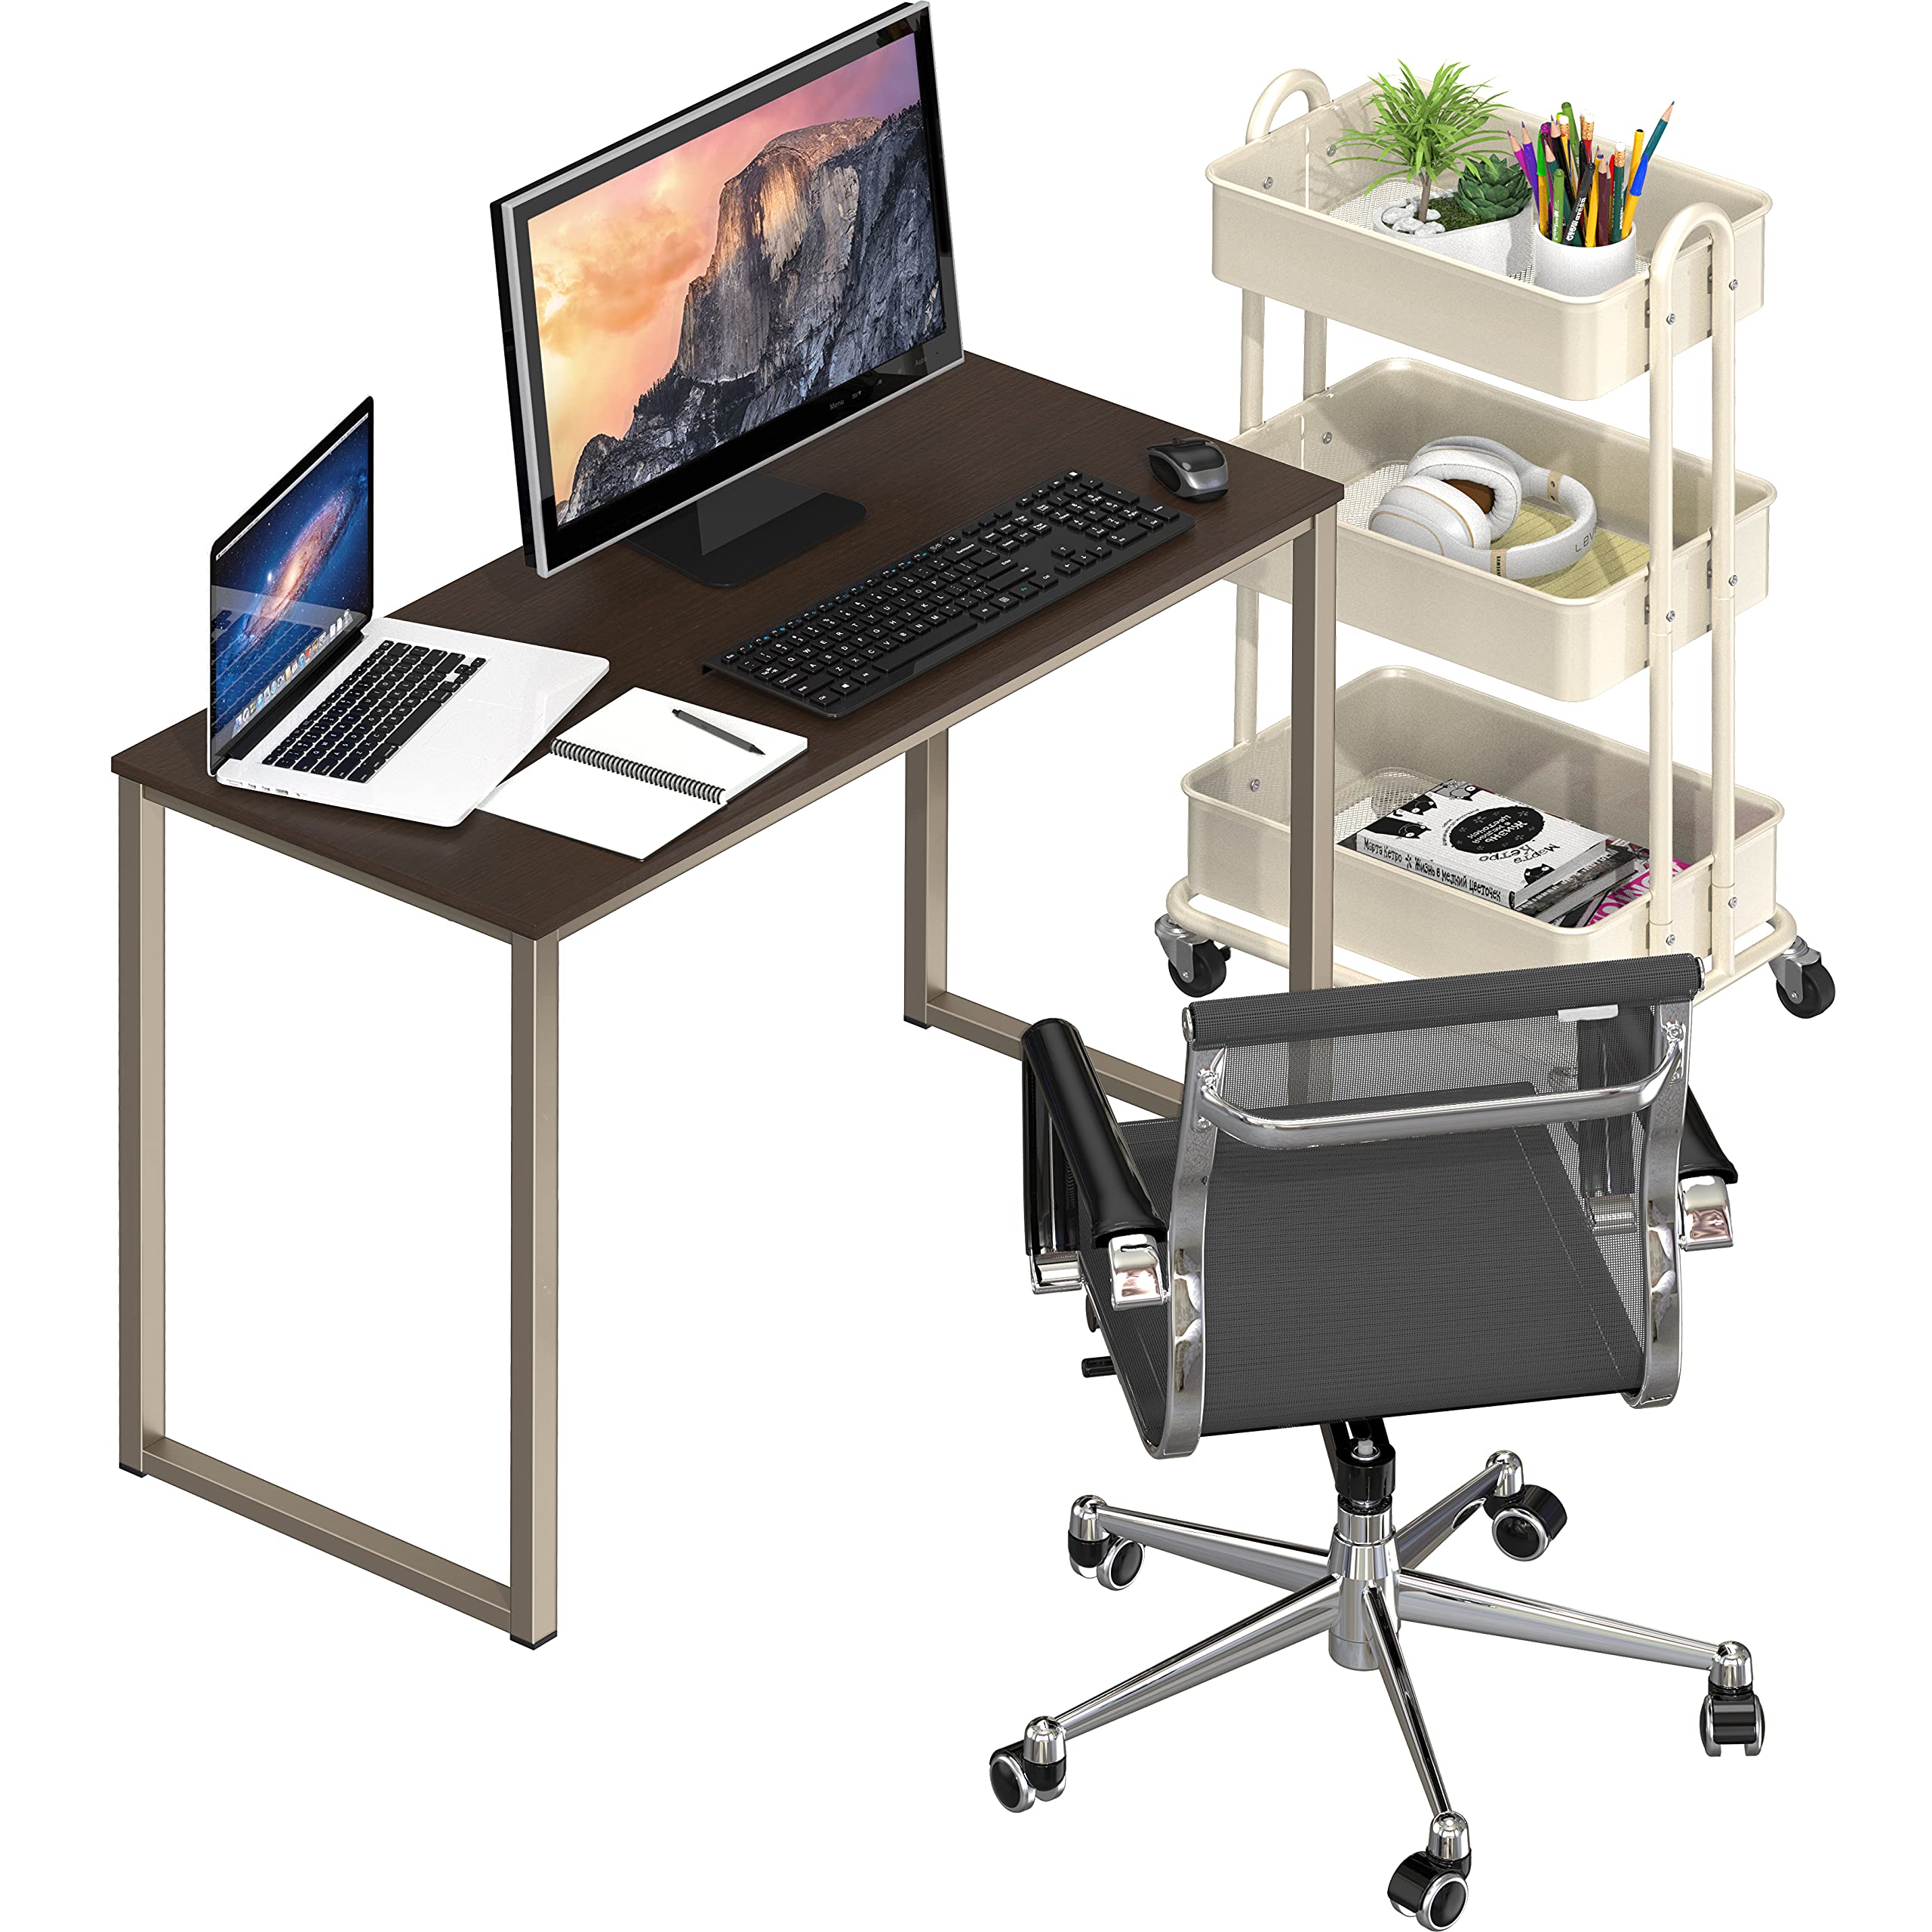 SHW Mission 32 inches office desk, Espresso - image 2 of 5